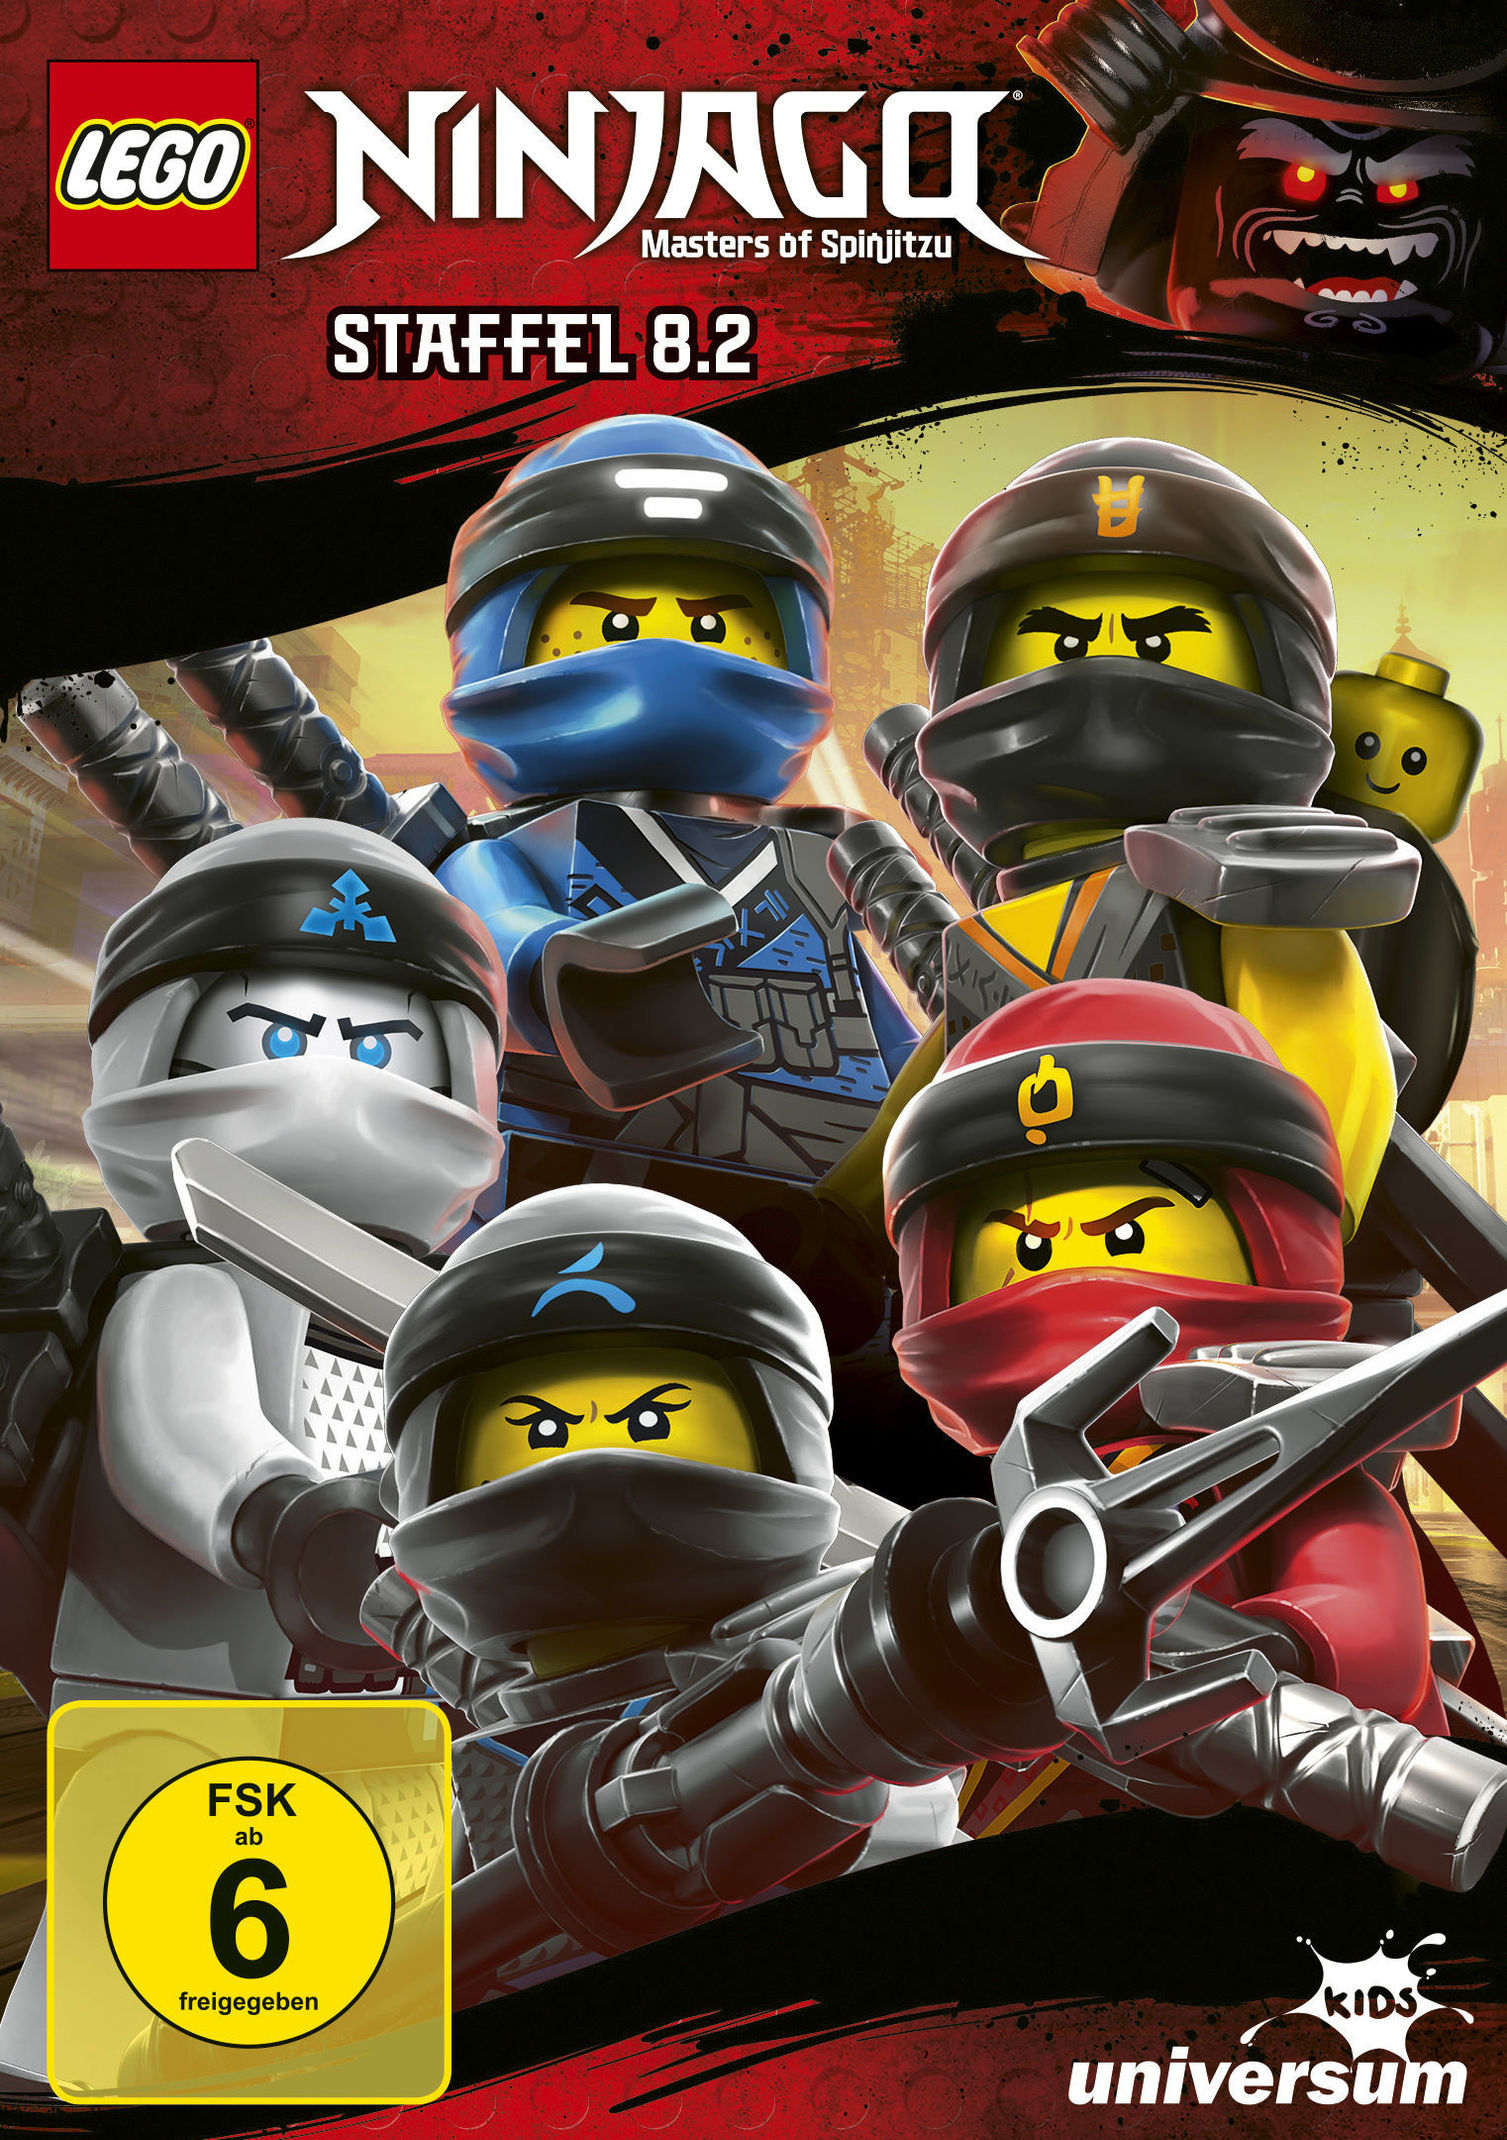 Lego Ninjago - Staffel 8.2 kaufen | tausendkind.at